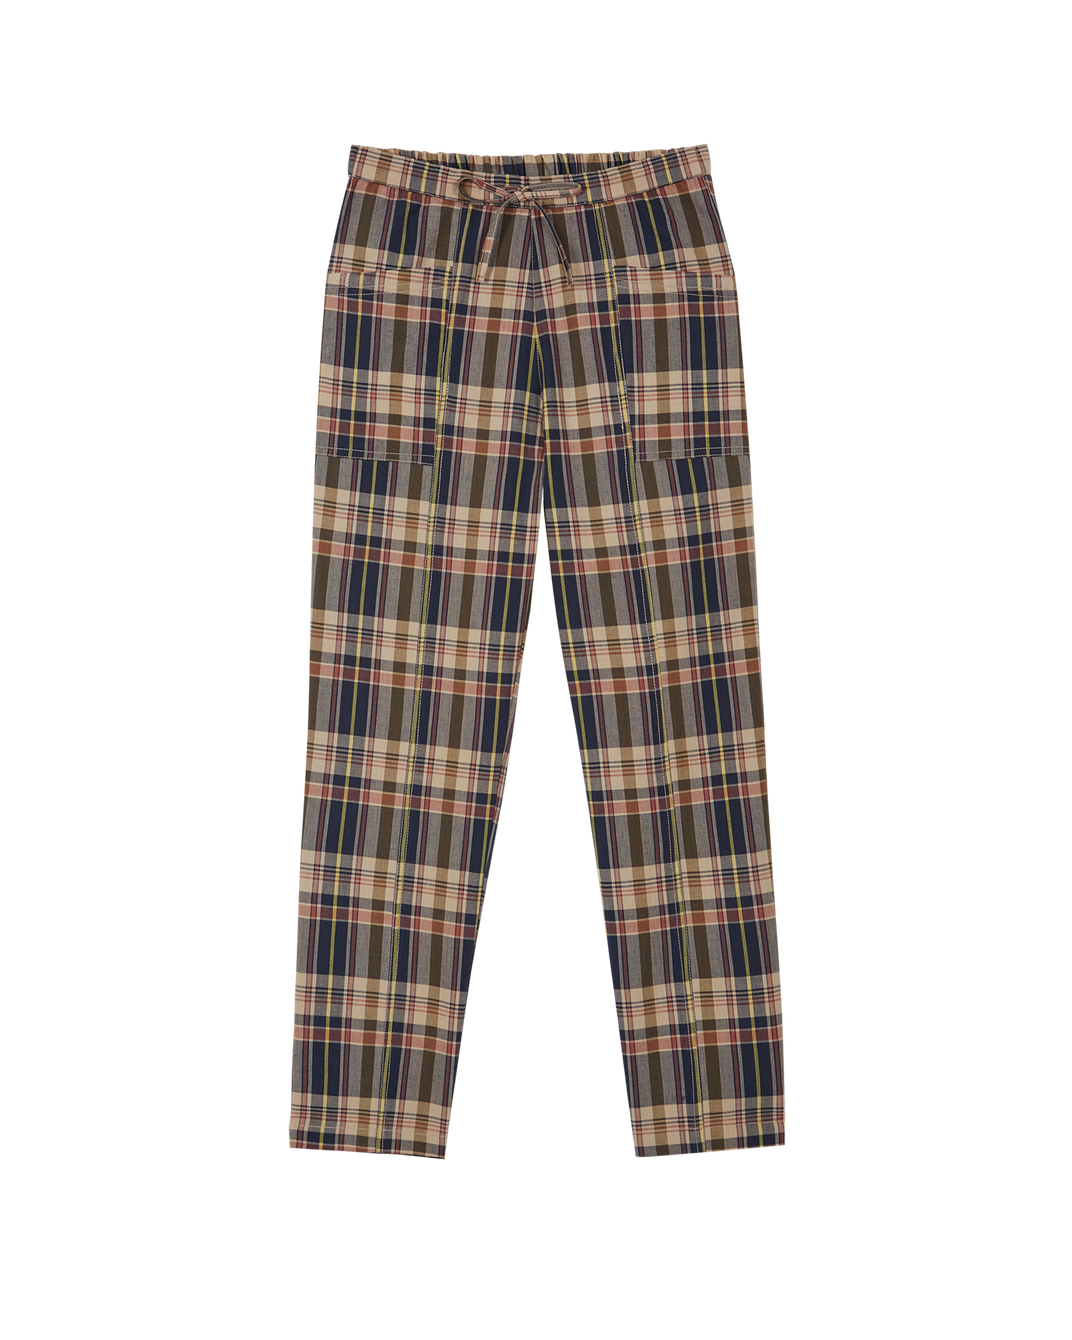 Pantalon coton madras